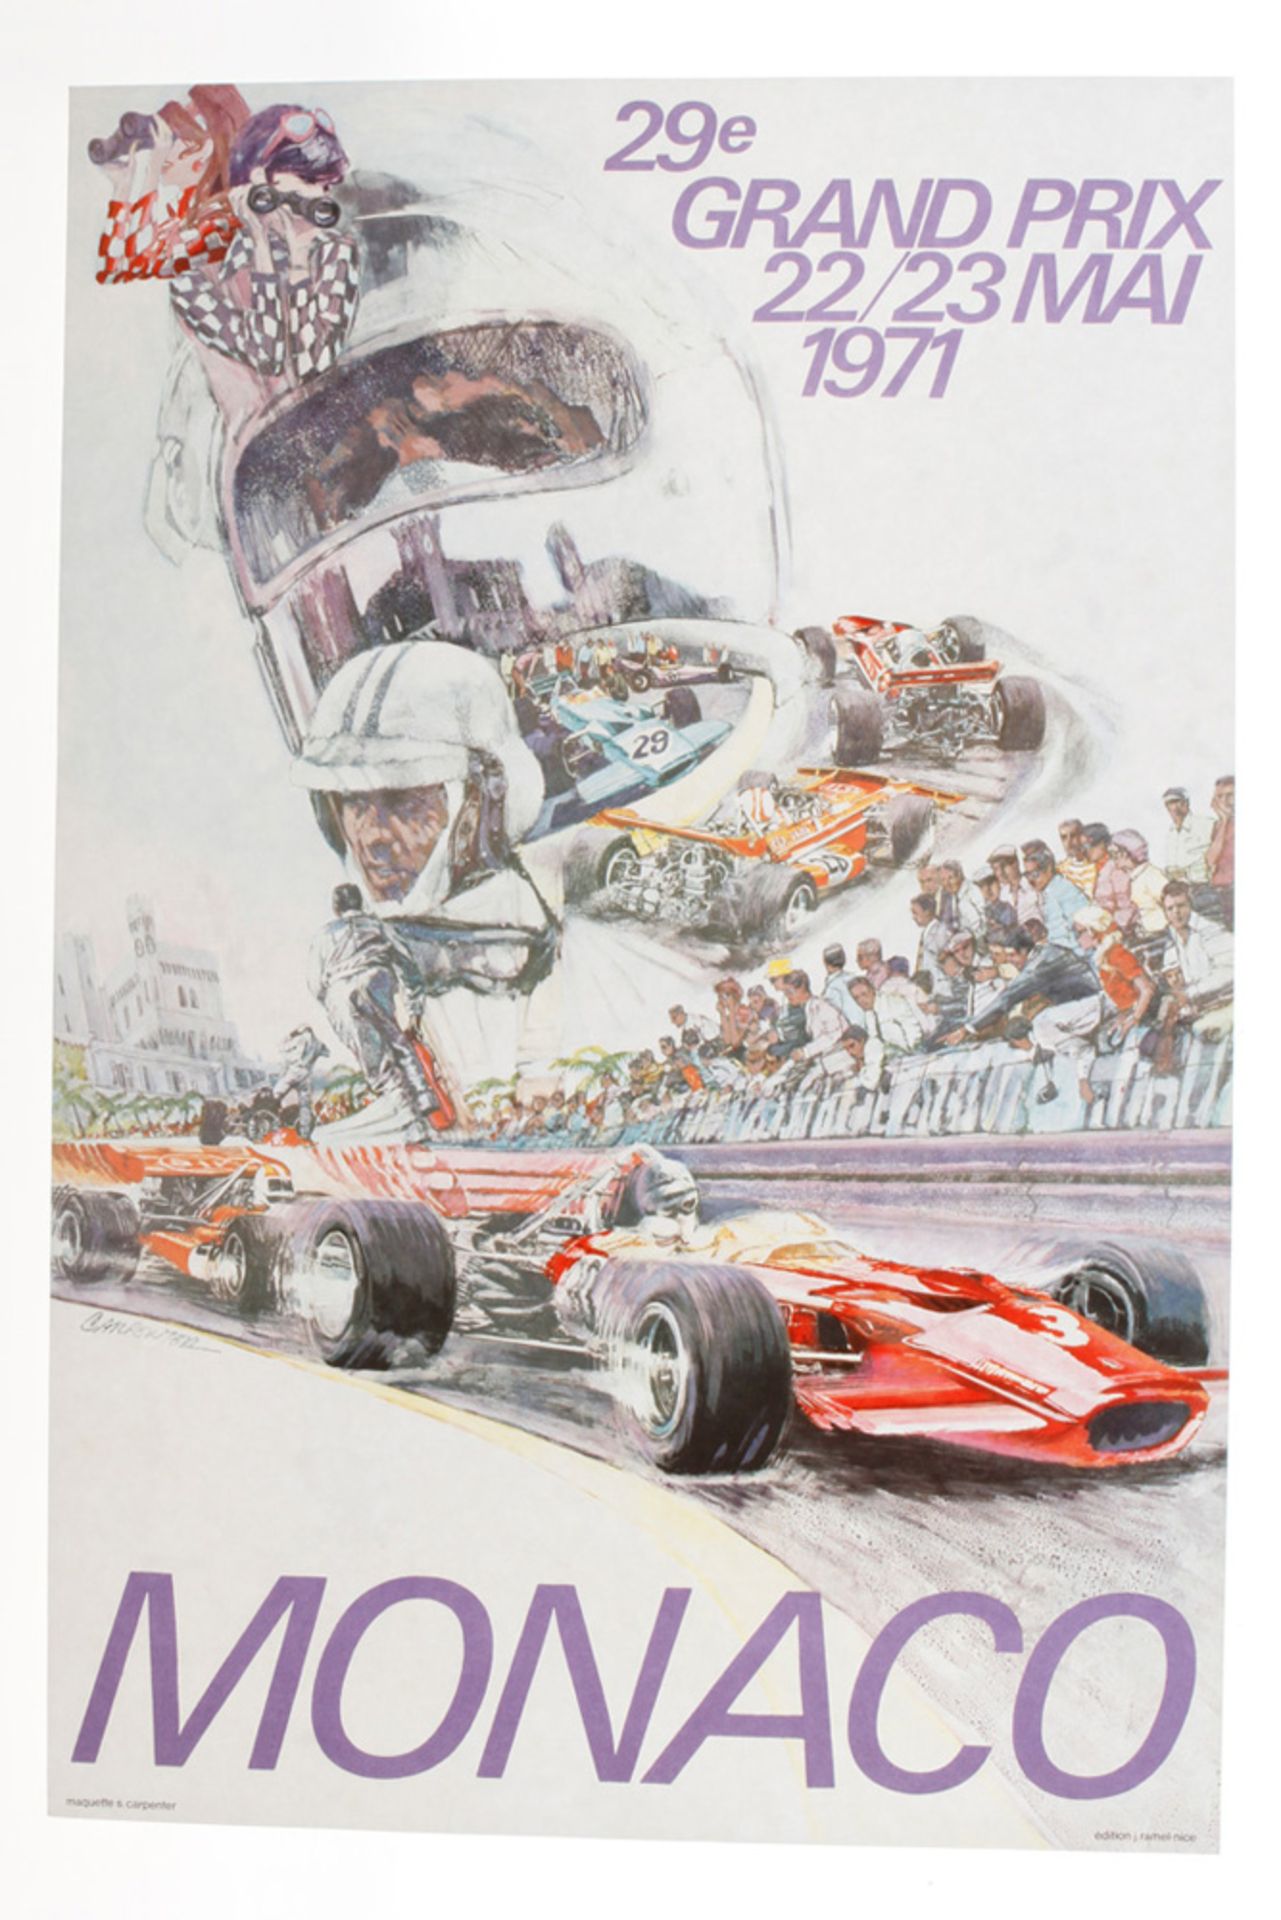 Orginal Rennplakat, Monaco Grand Prix 22/23 Mai 1971,  Maquette s. carpenter, edition j.ramel-